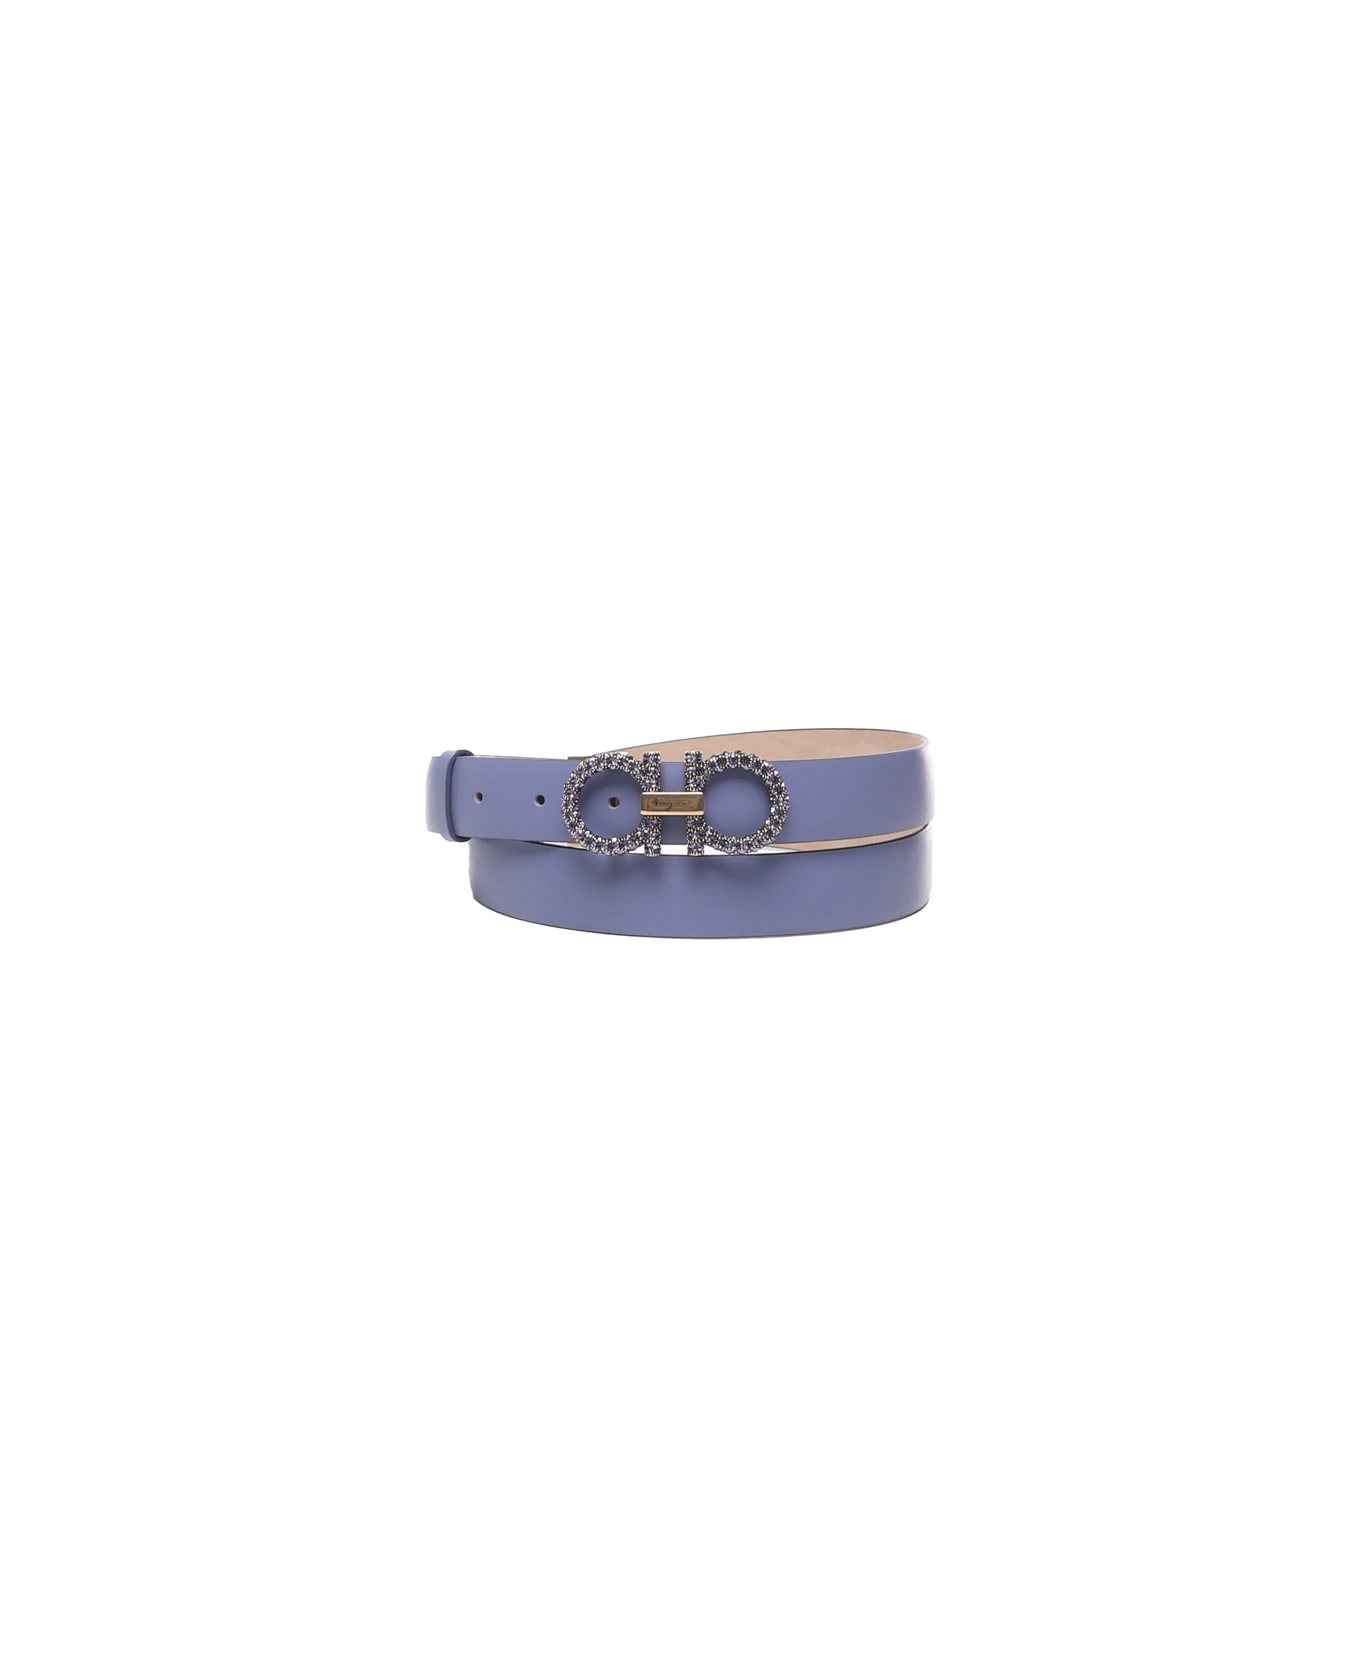 Ferragamo Leather Belt With Embellished Gancino Buckle - Blue